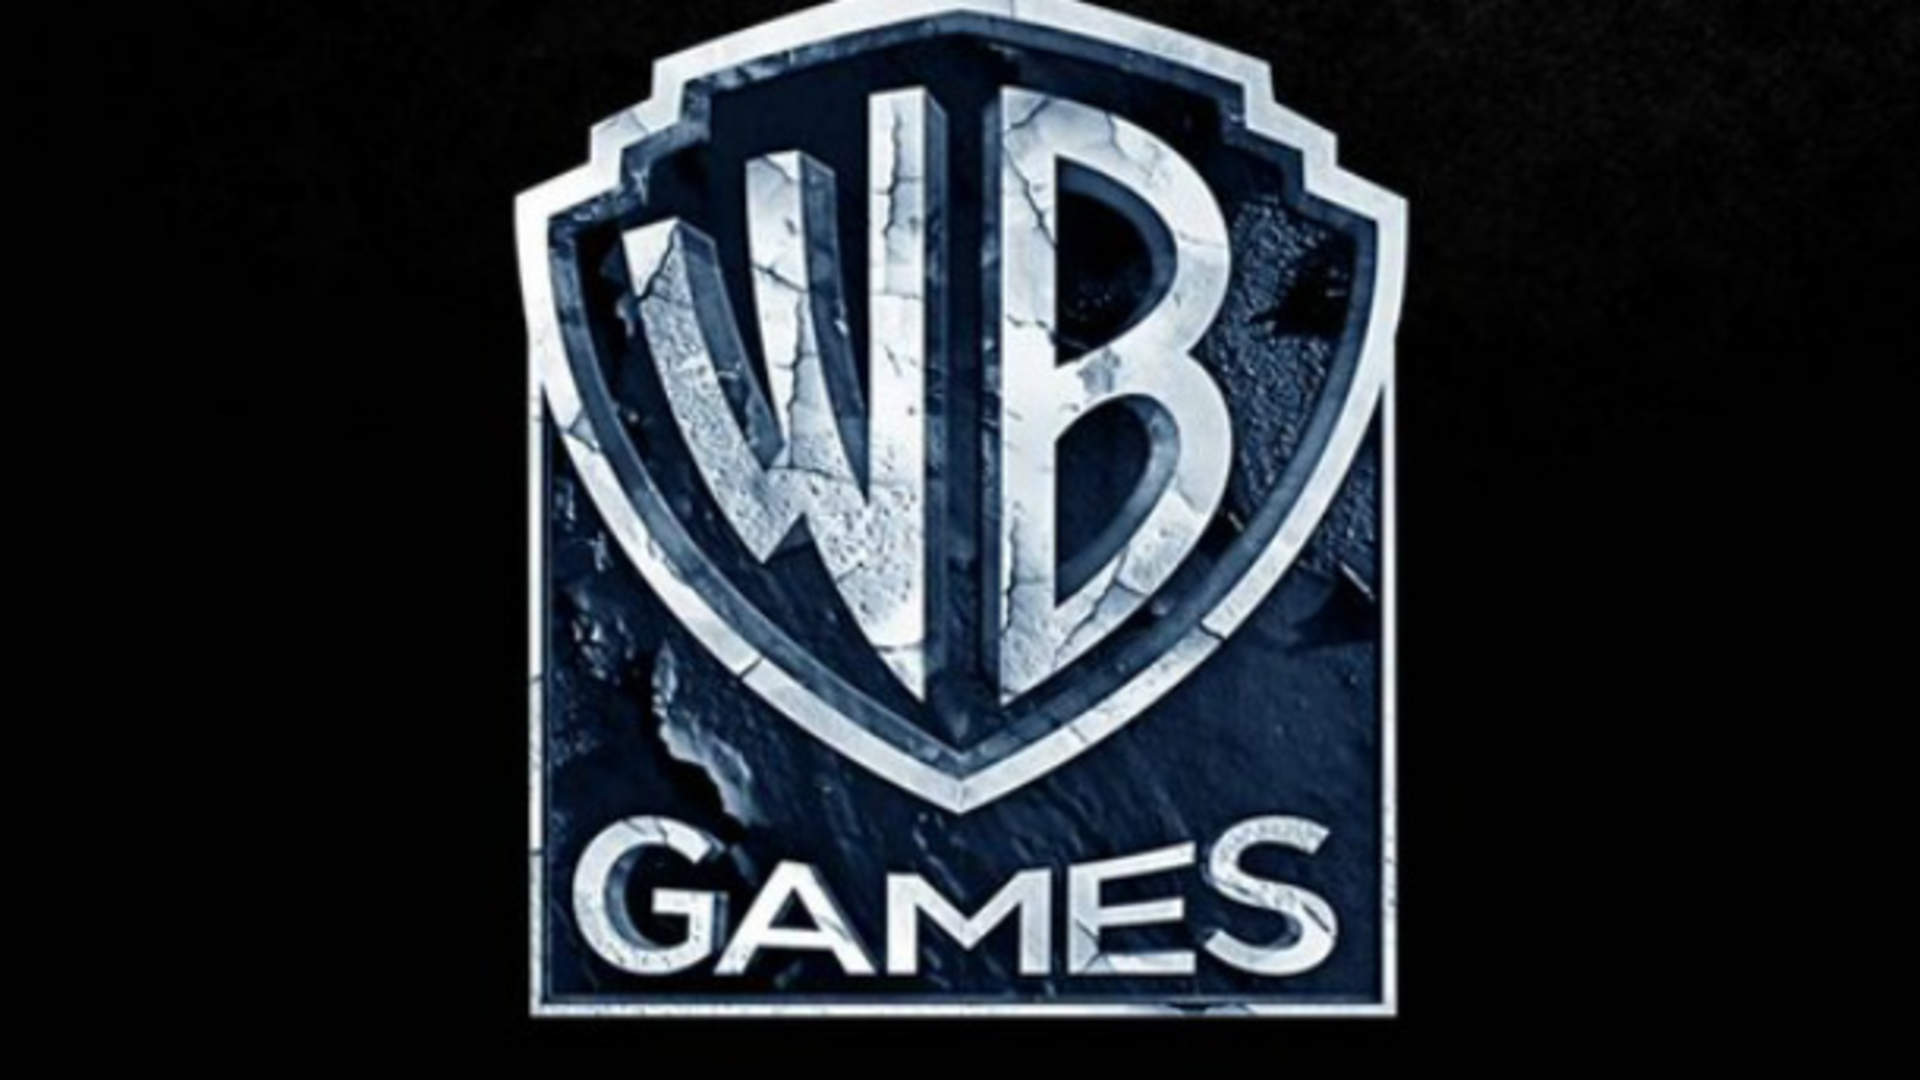 What Warner Bros. Games Must Get Right Under WBD